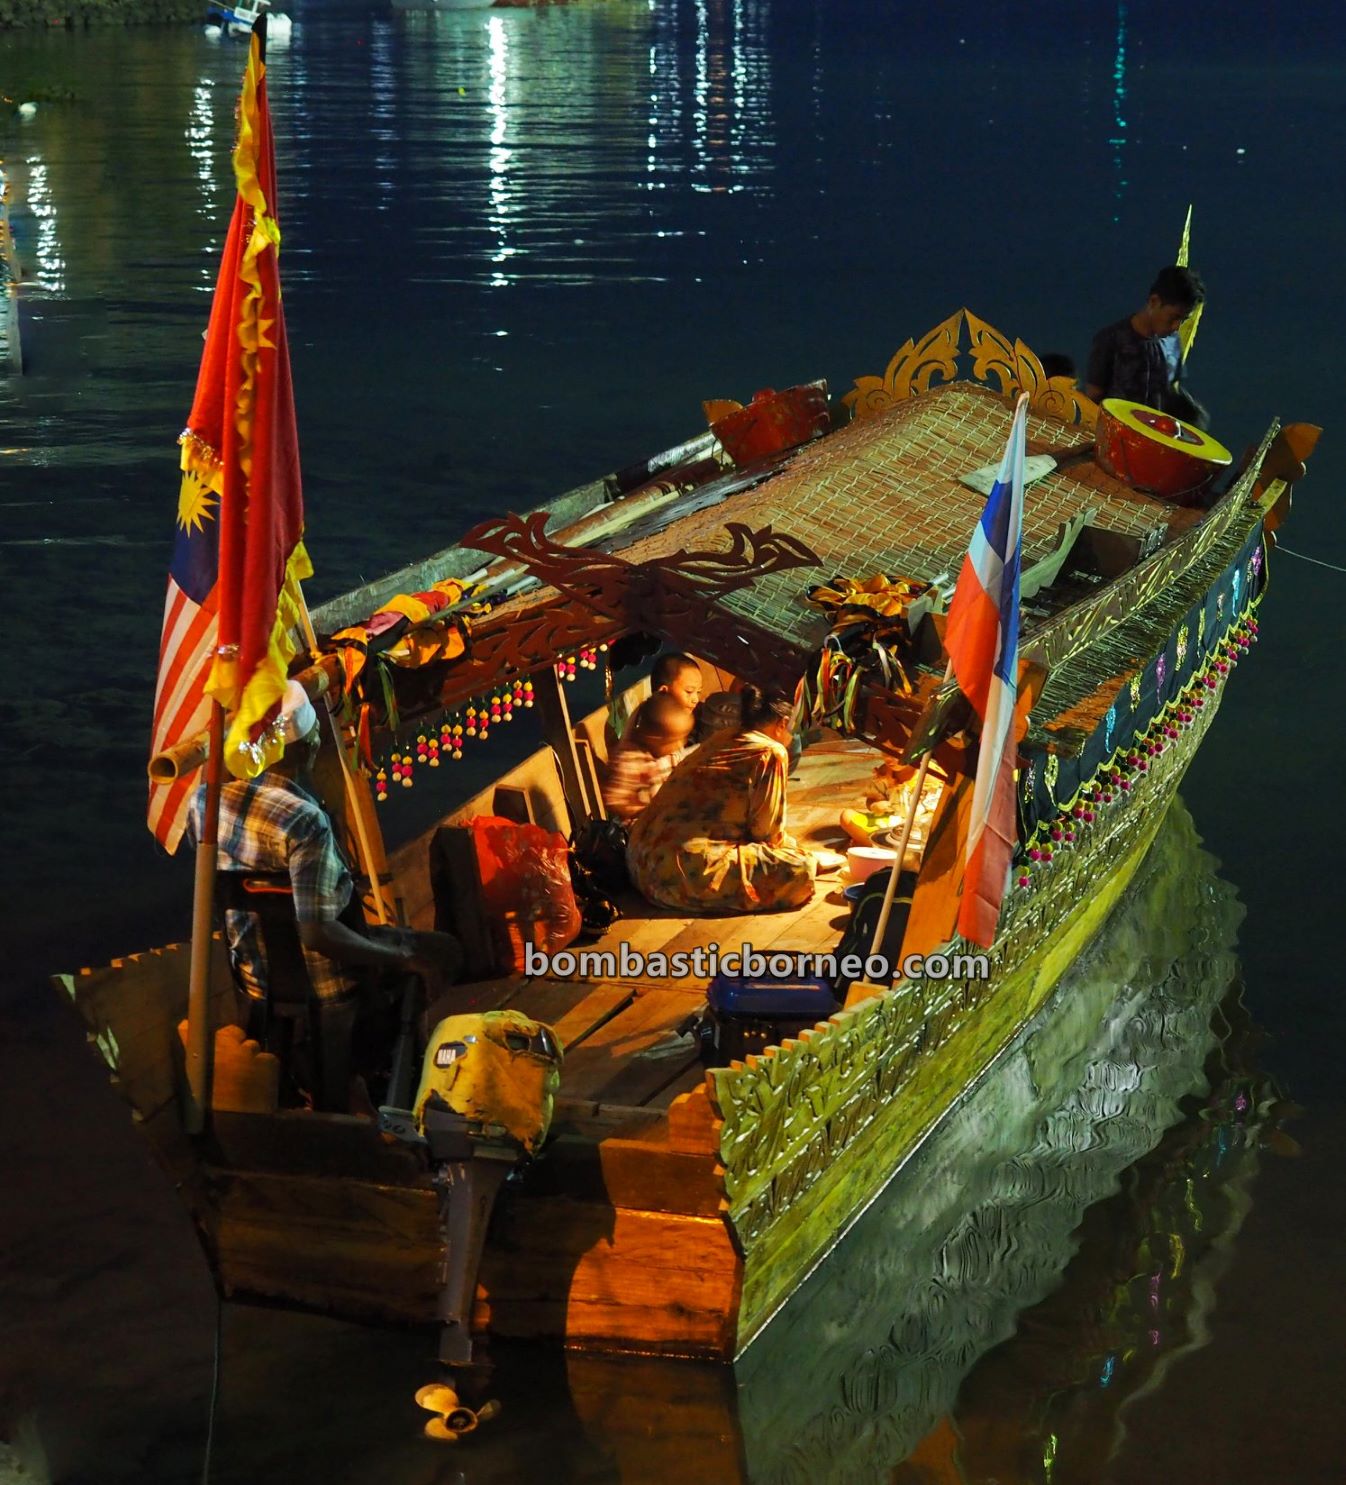 Water Festival, Lepa-lepa, Sailing Boat, Sea Gypsies, Suku Bajau Laut, ethnic, culture, traditional, indigenous, Semporna, Sabah, Malaysia, Tourism, travel guide, Borneo